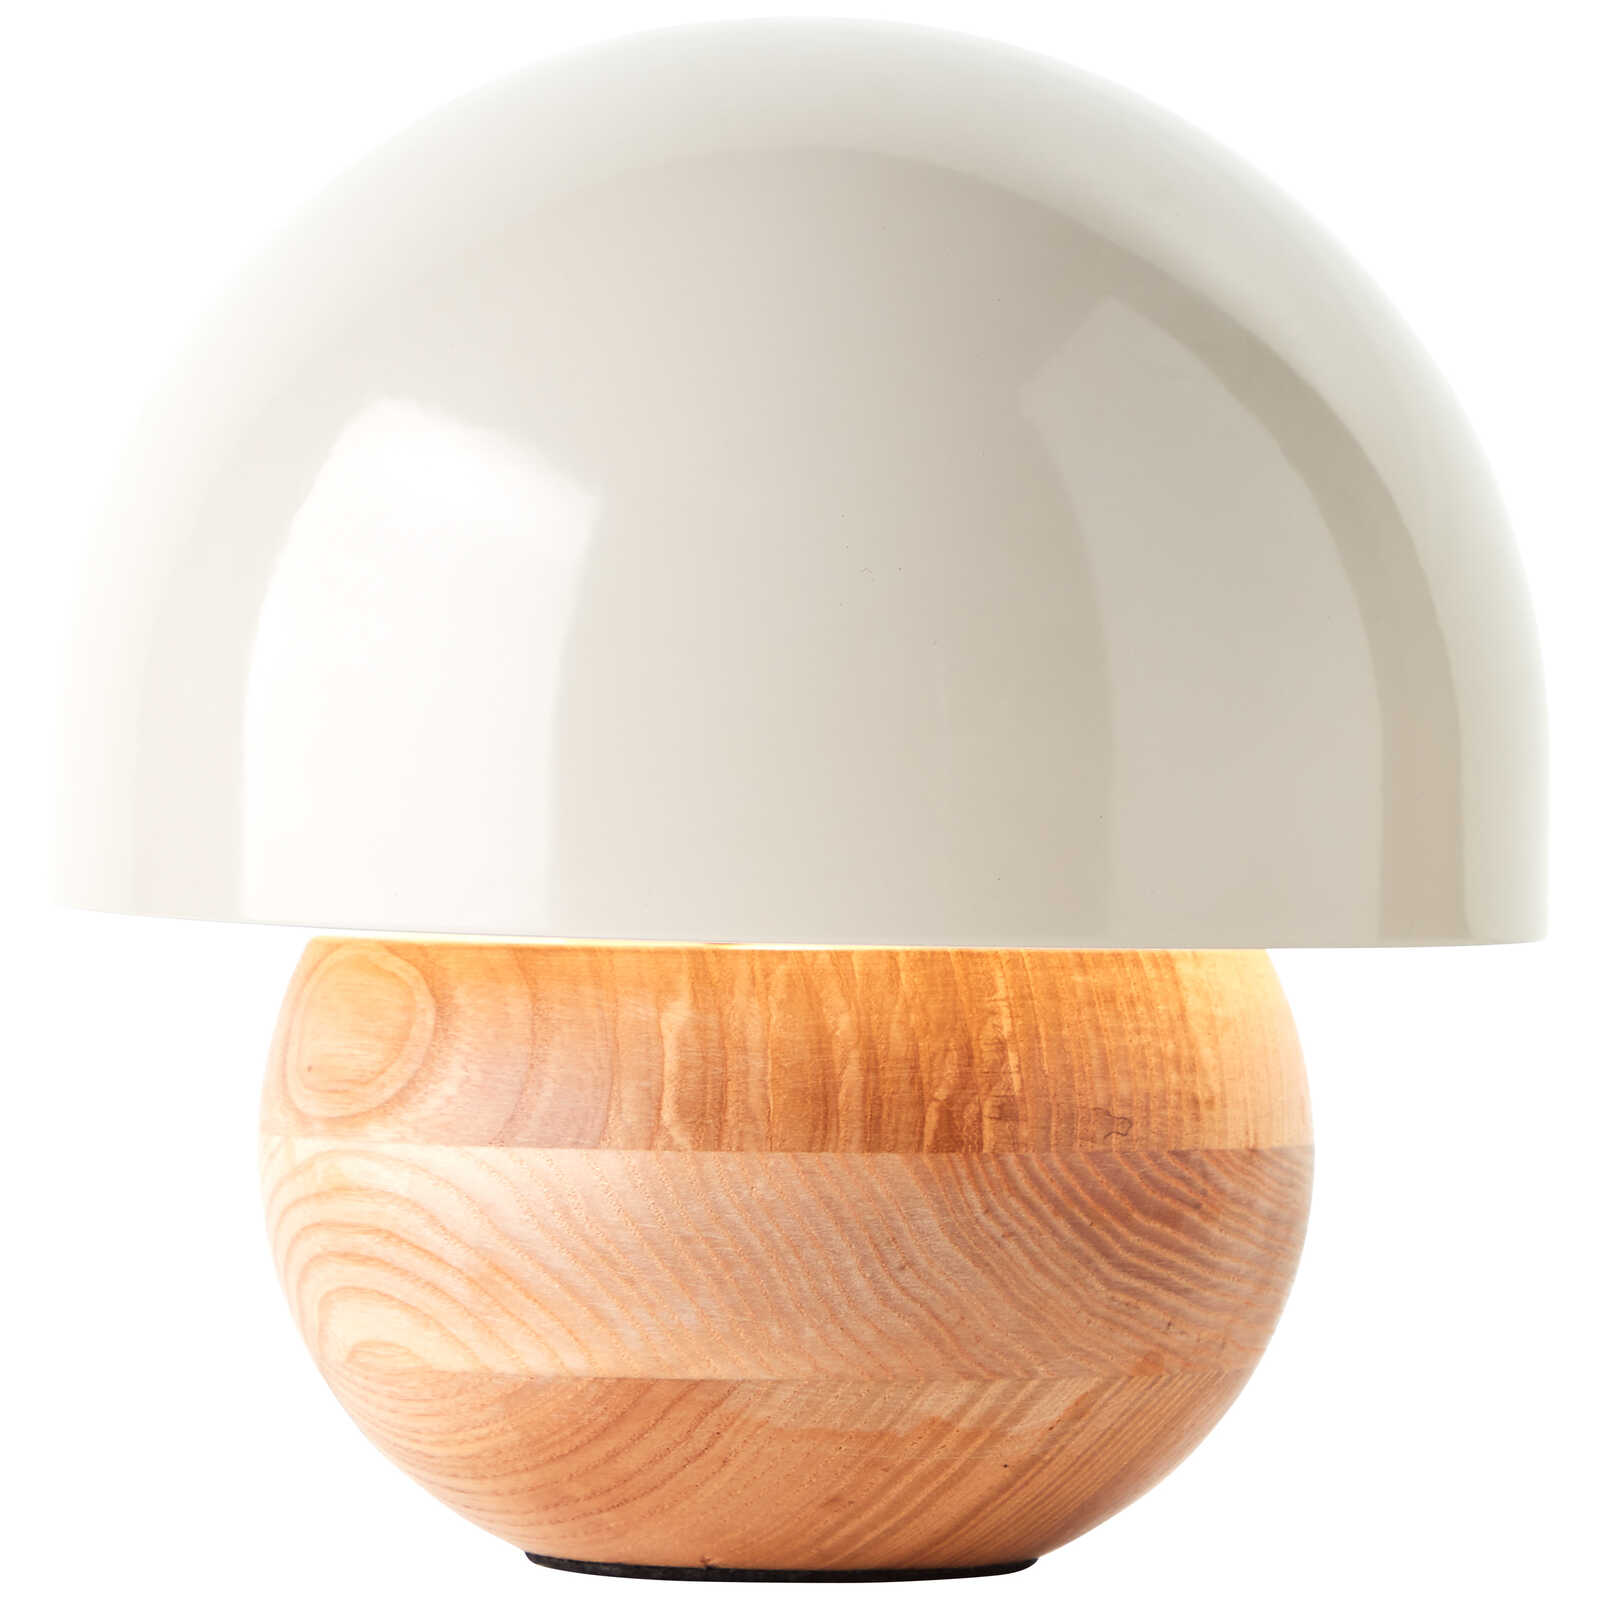             Wooden table lamp - Lorena 2 - Beige
        